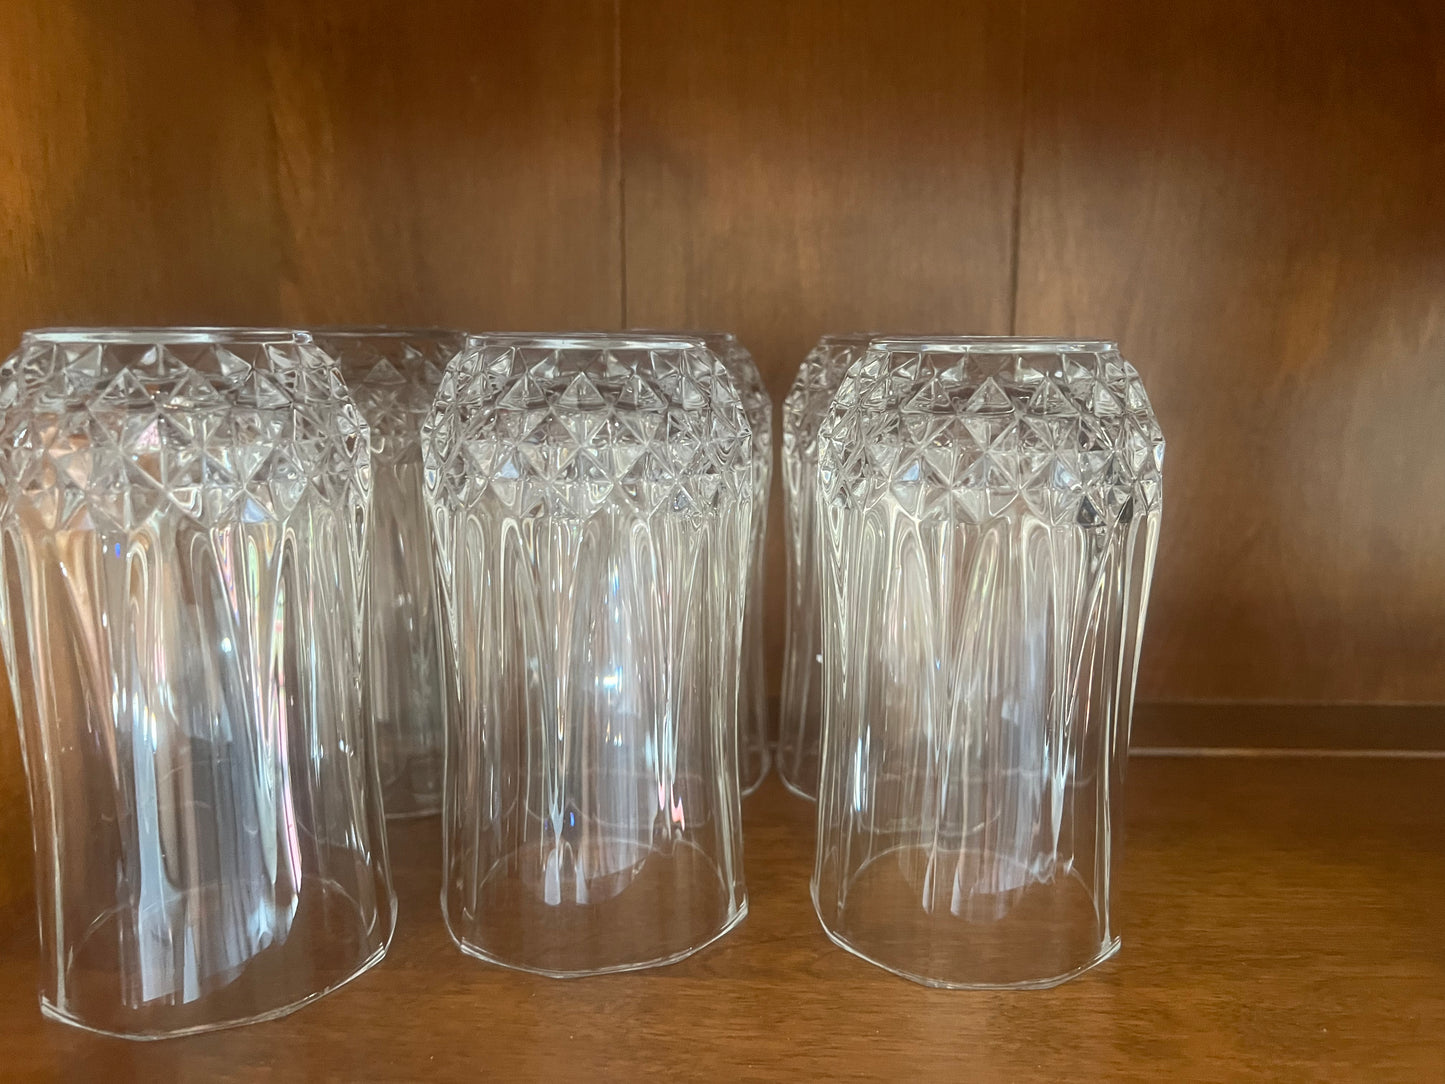 Depew #21 crystal glassware set